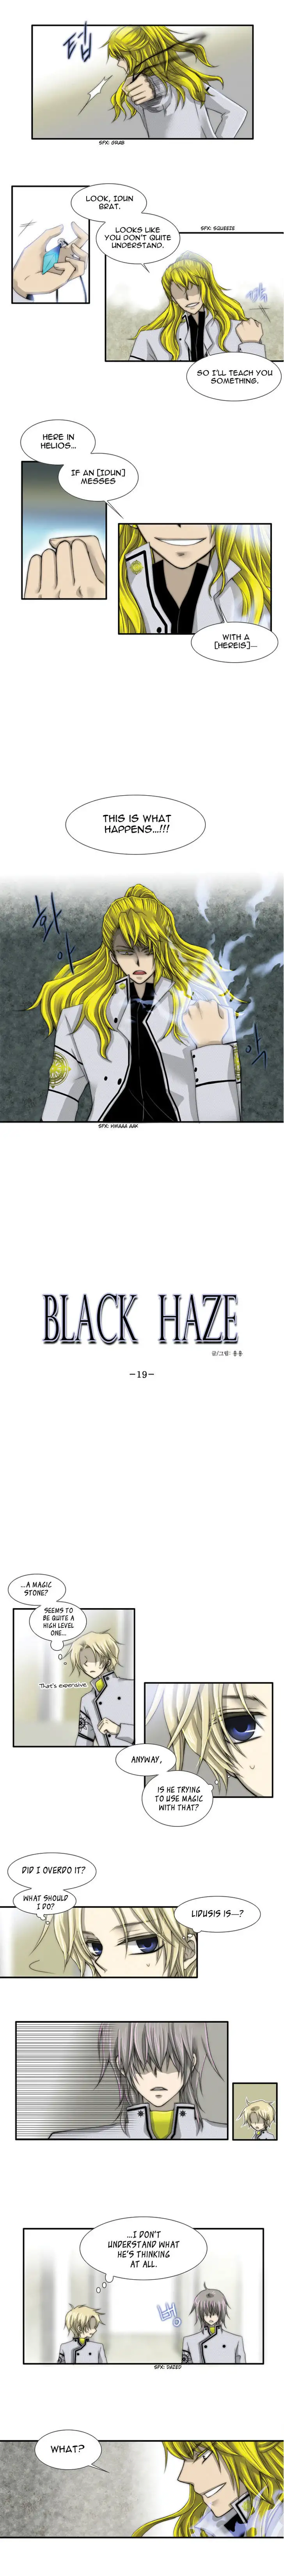 Black Haze - Chapter 19 Page 2